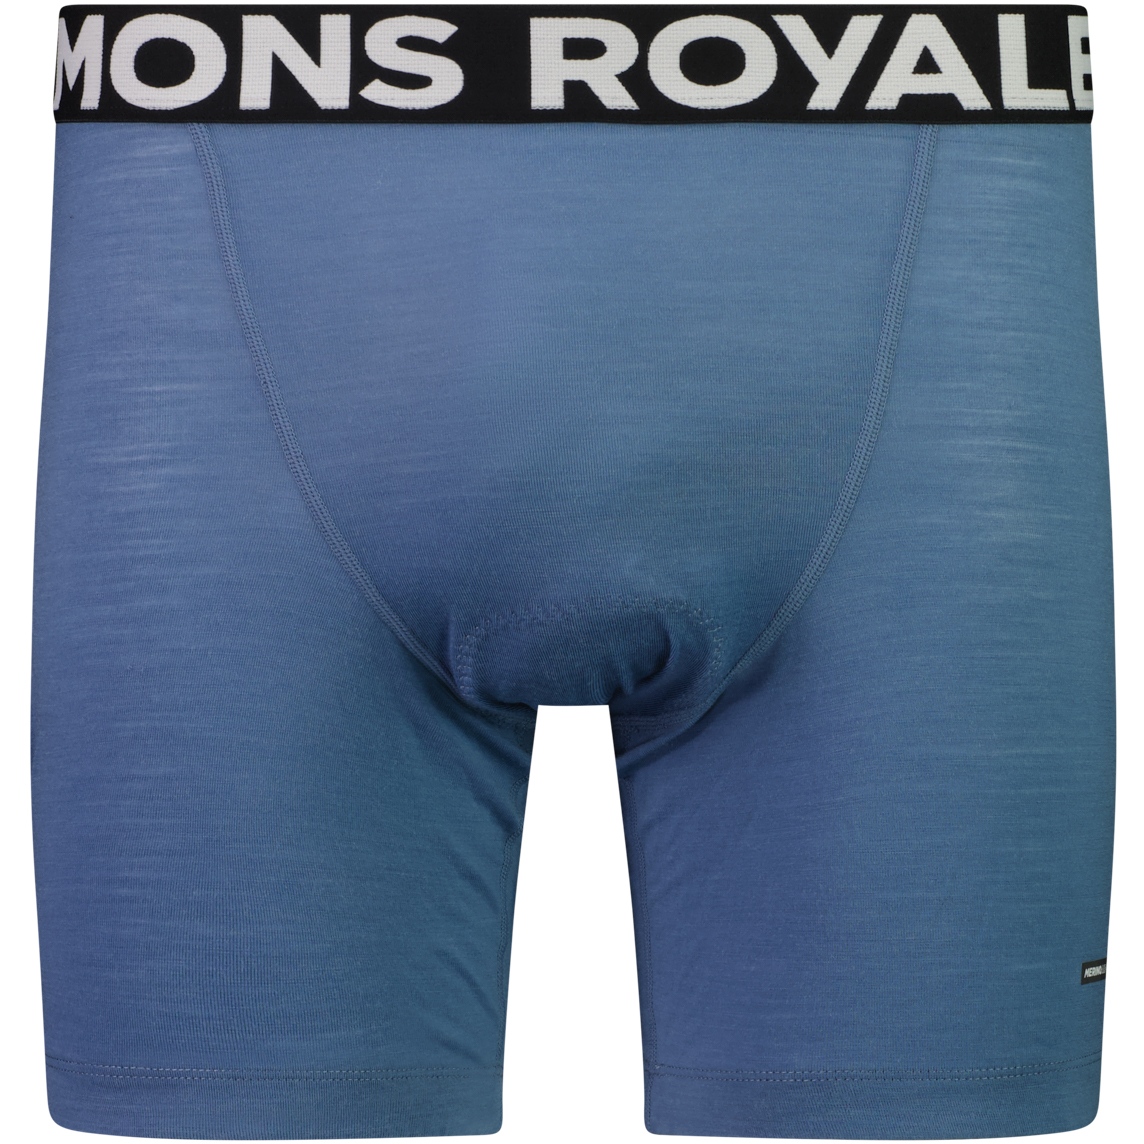 Produktbild von Mons Royale Low Pro Merino Air-Con MTB Unterhose Herren - blue slate